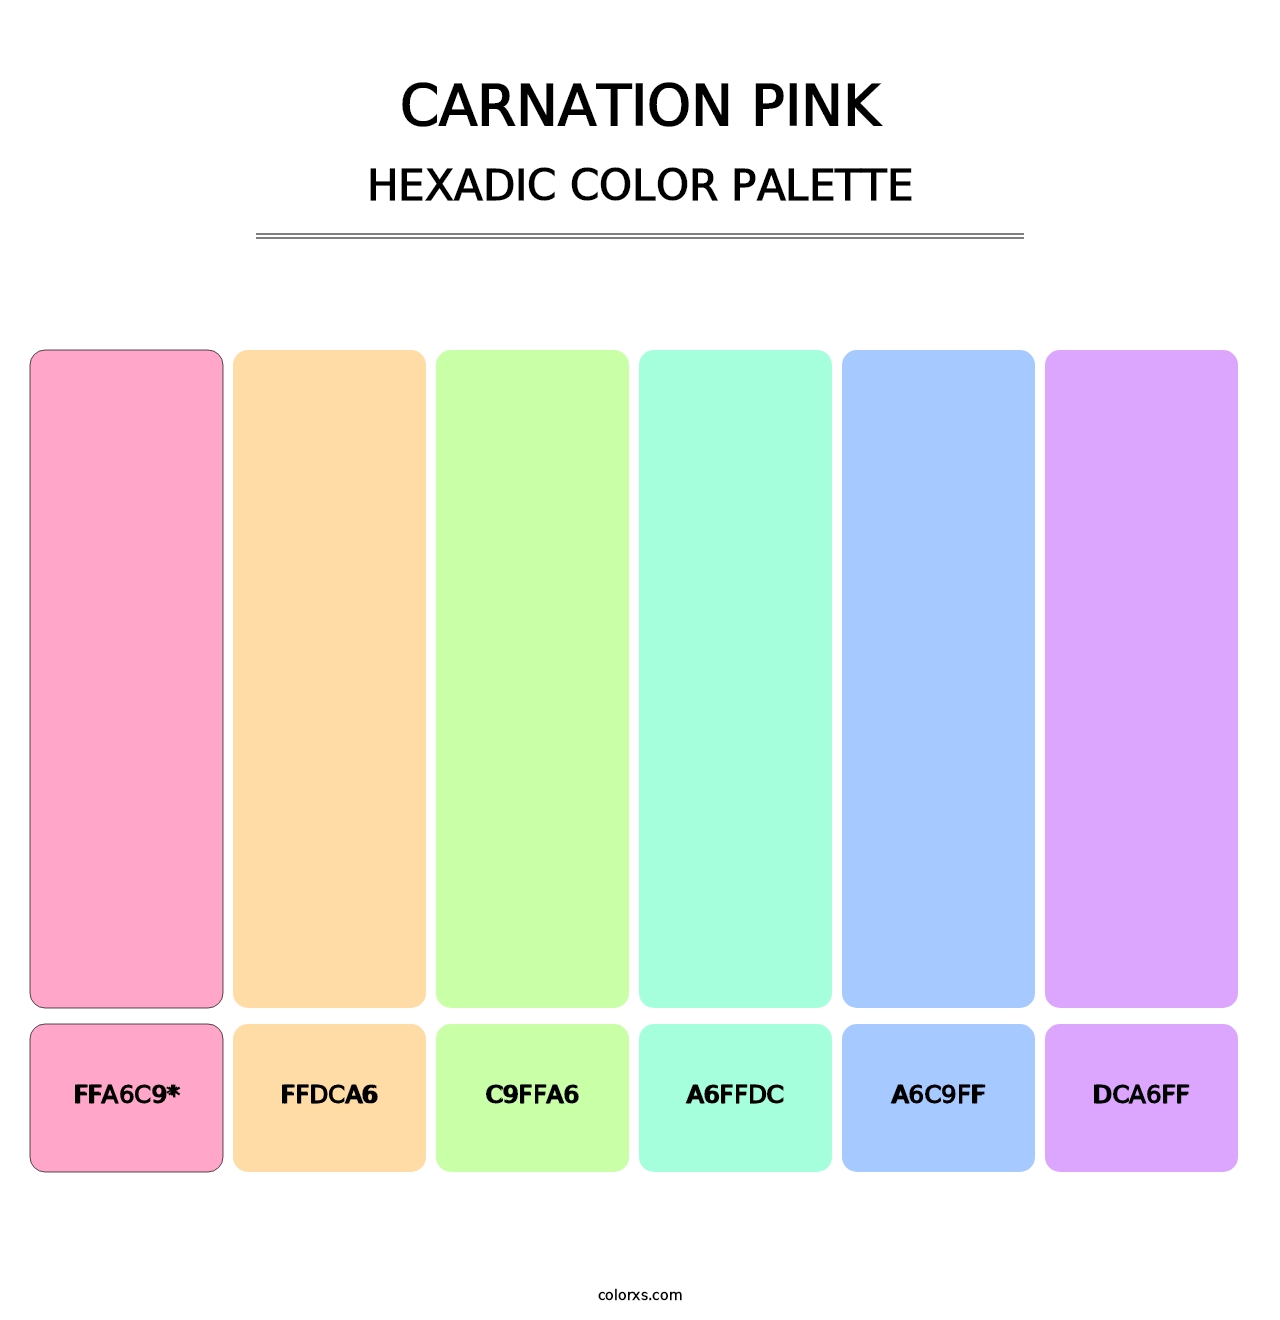 Carnation Pink - Hexadic Color Palette